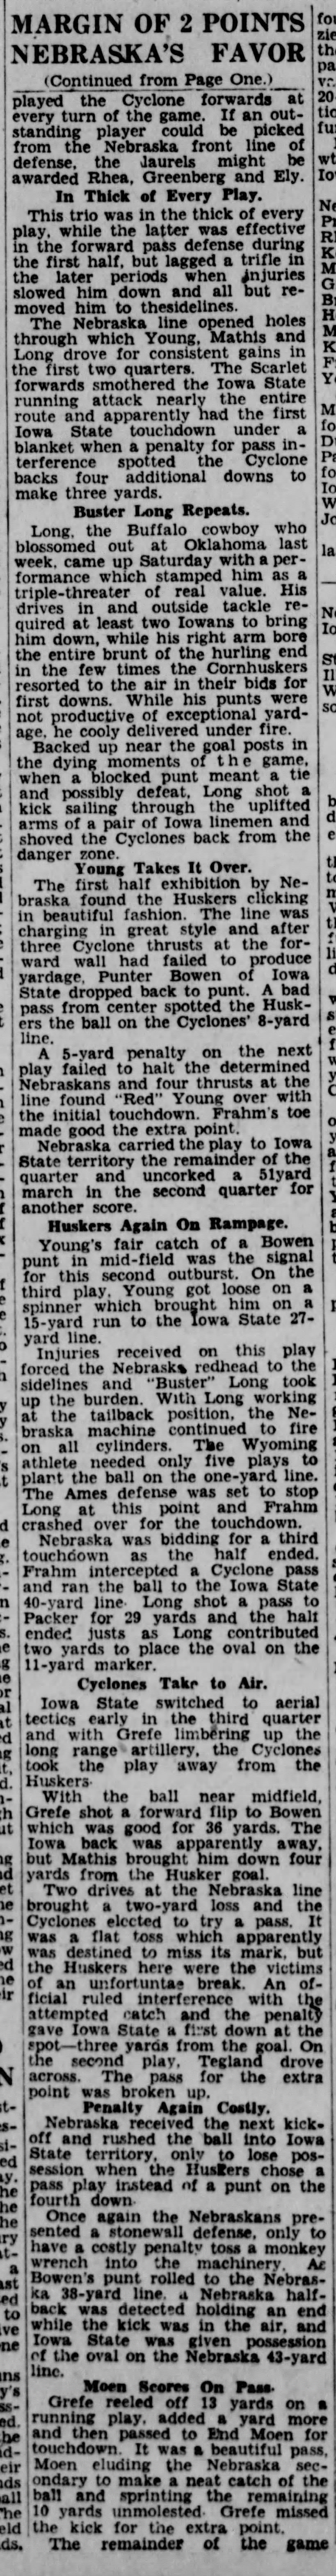 1930 Nebraska-Iowa State football, part 3